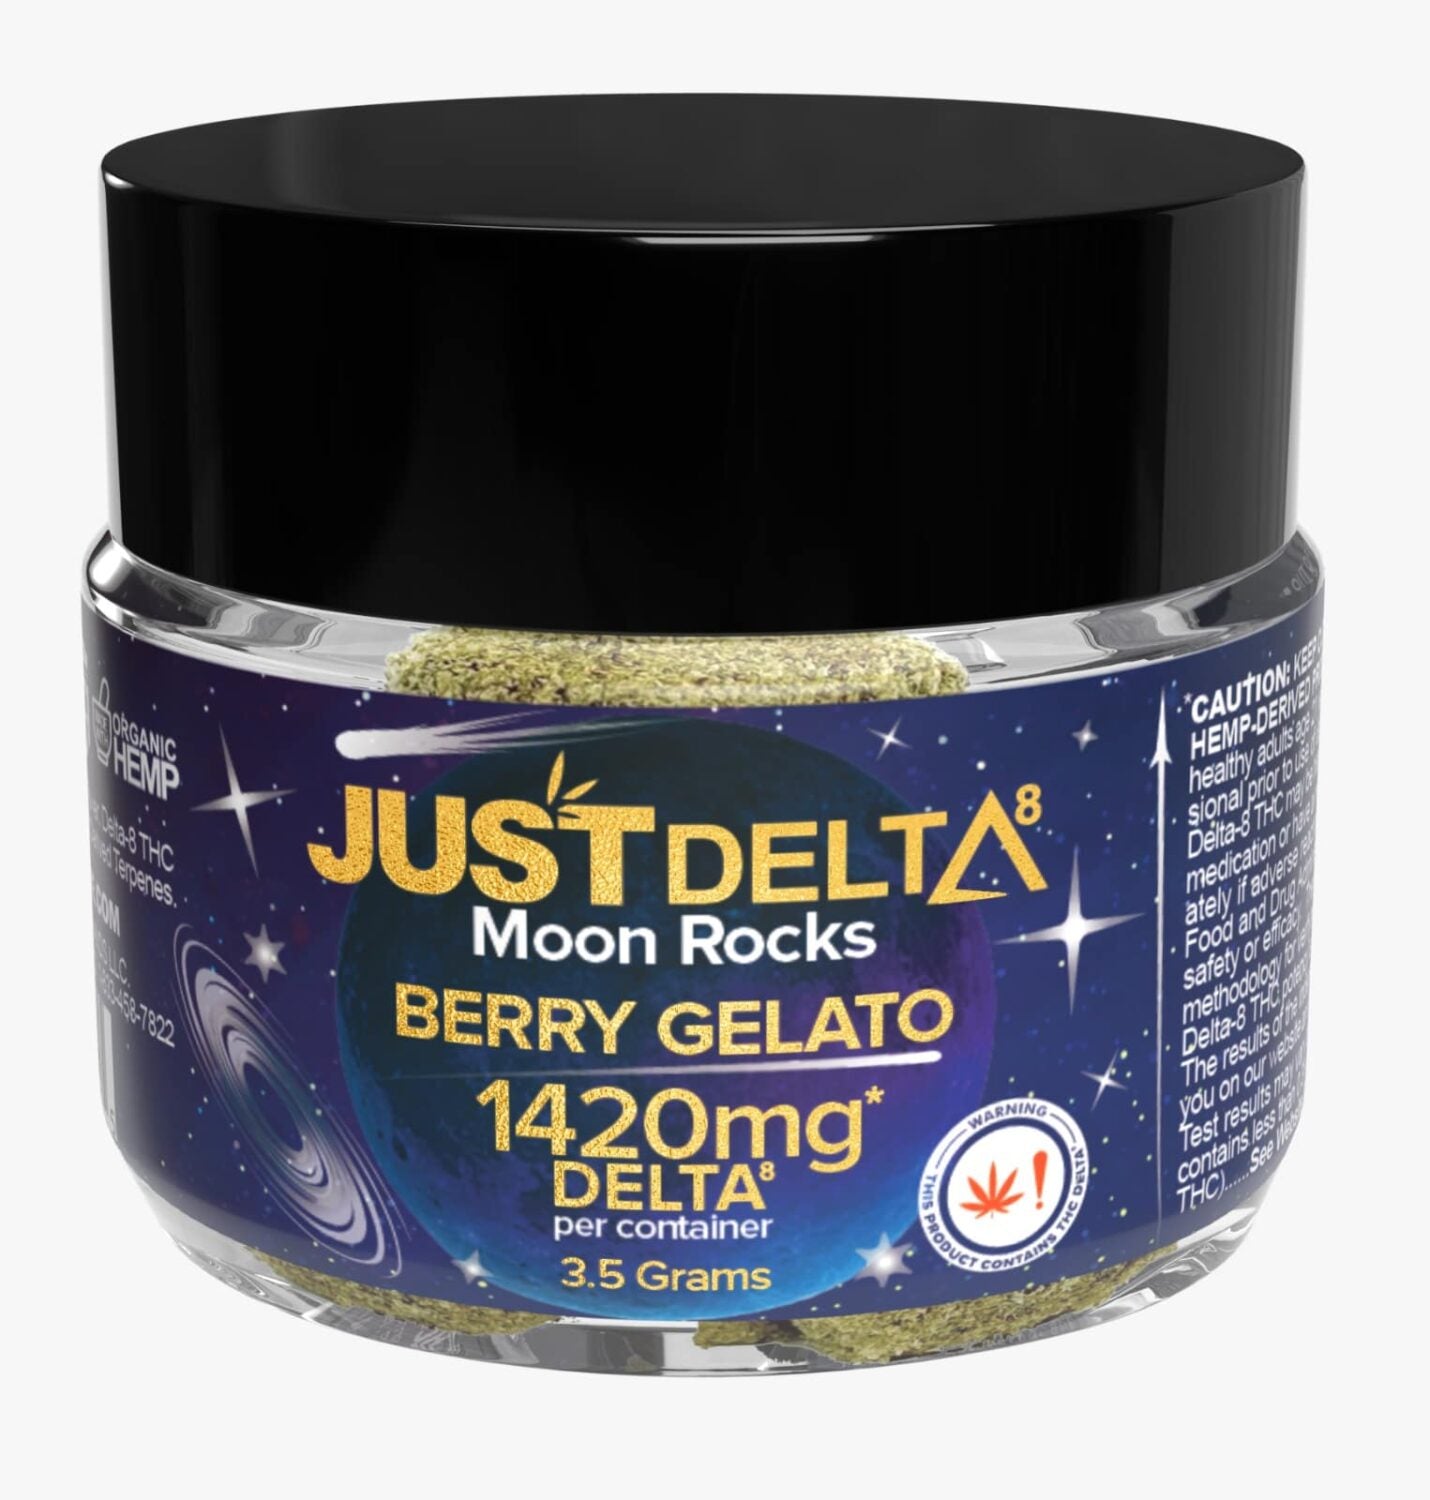 Just Delta - Delta 8 Moon Rocks Flower Just Delta Berry Gelato  